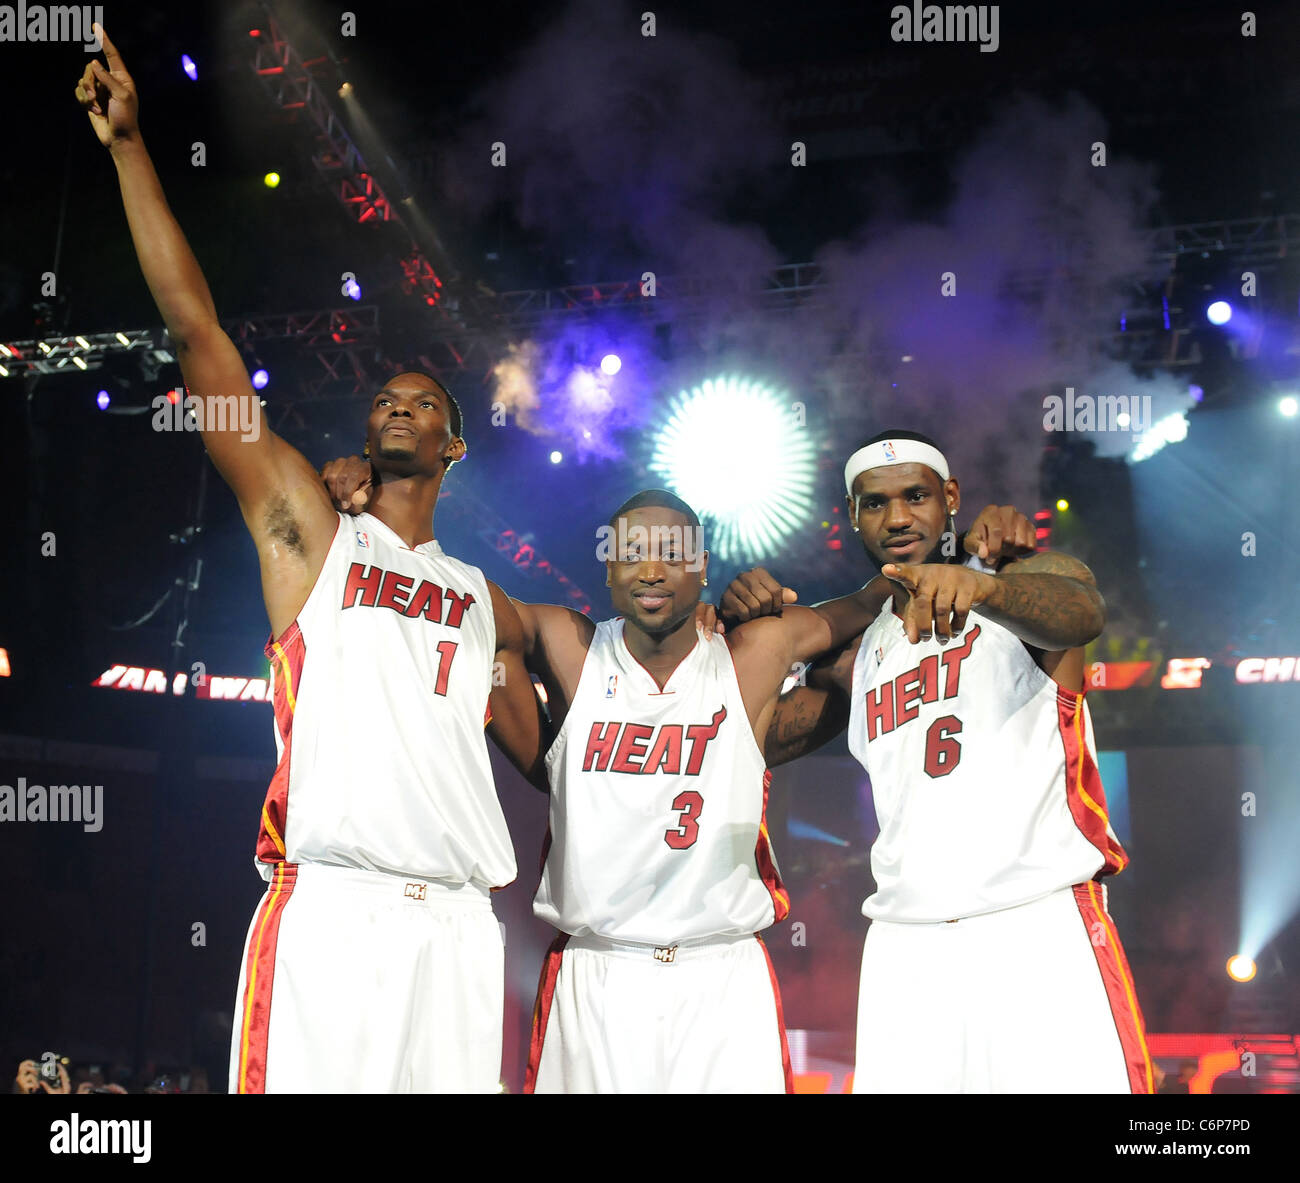 VIDEO: Chris Bosh Brilliantly Edits Himself Into Iconic Wade-LeBron Miami  Heat Dunk Photo